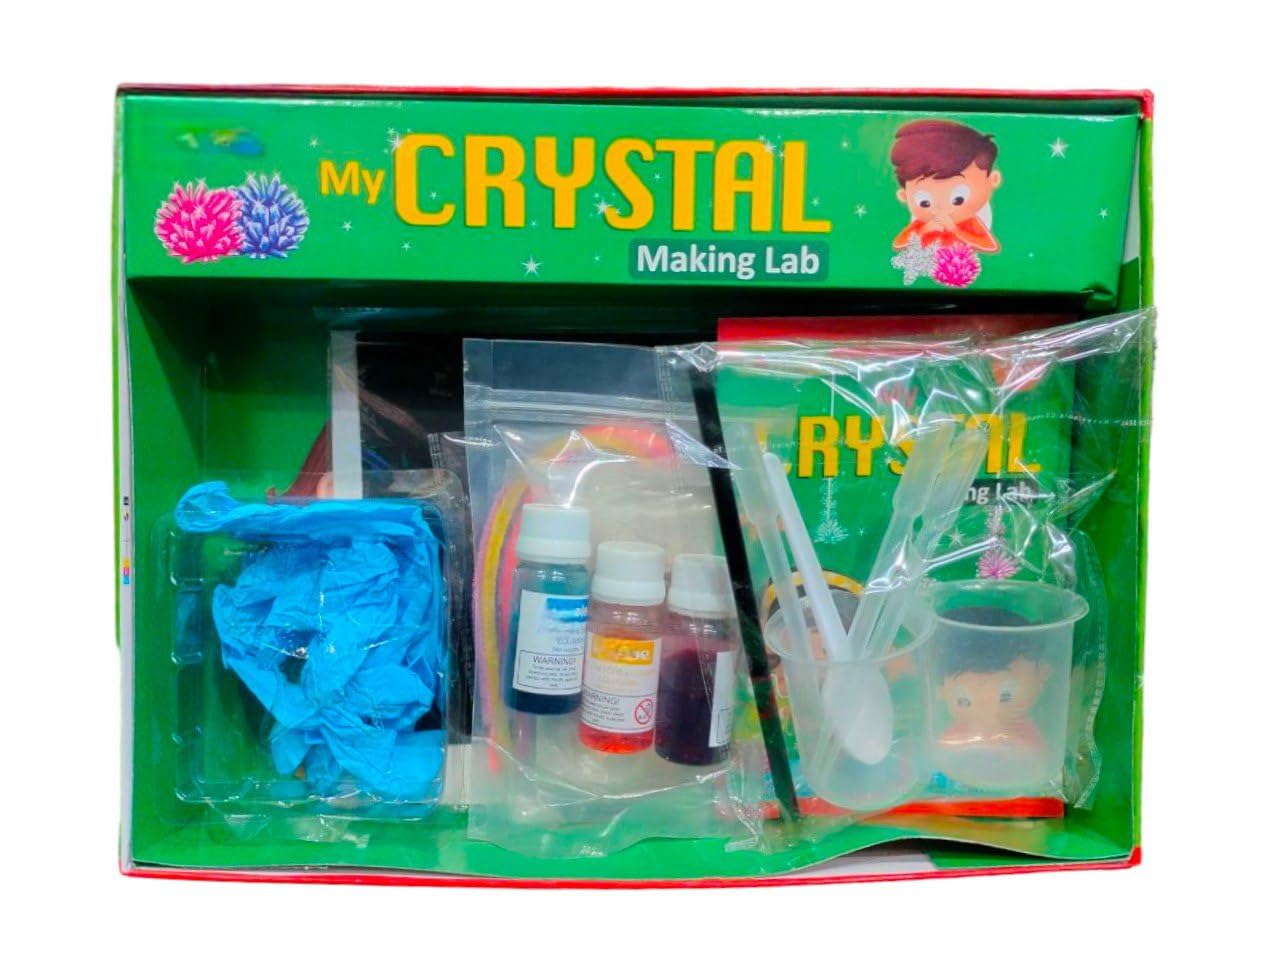 Crystal Making Lab